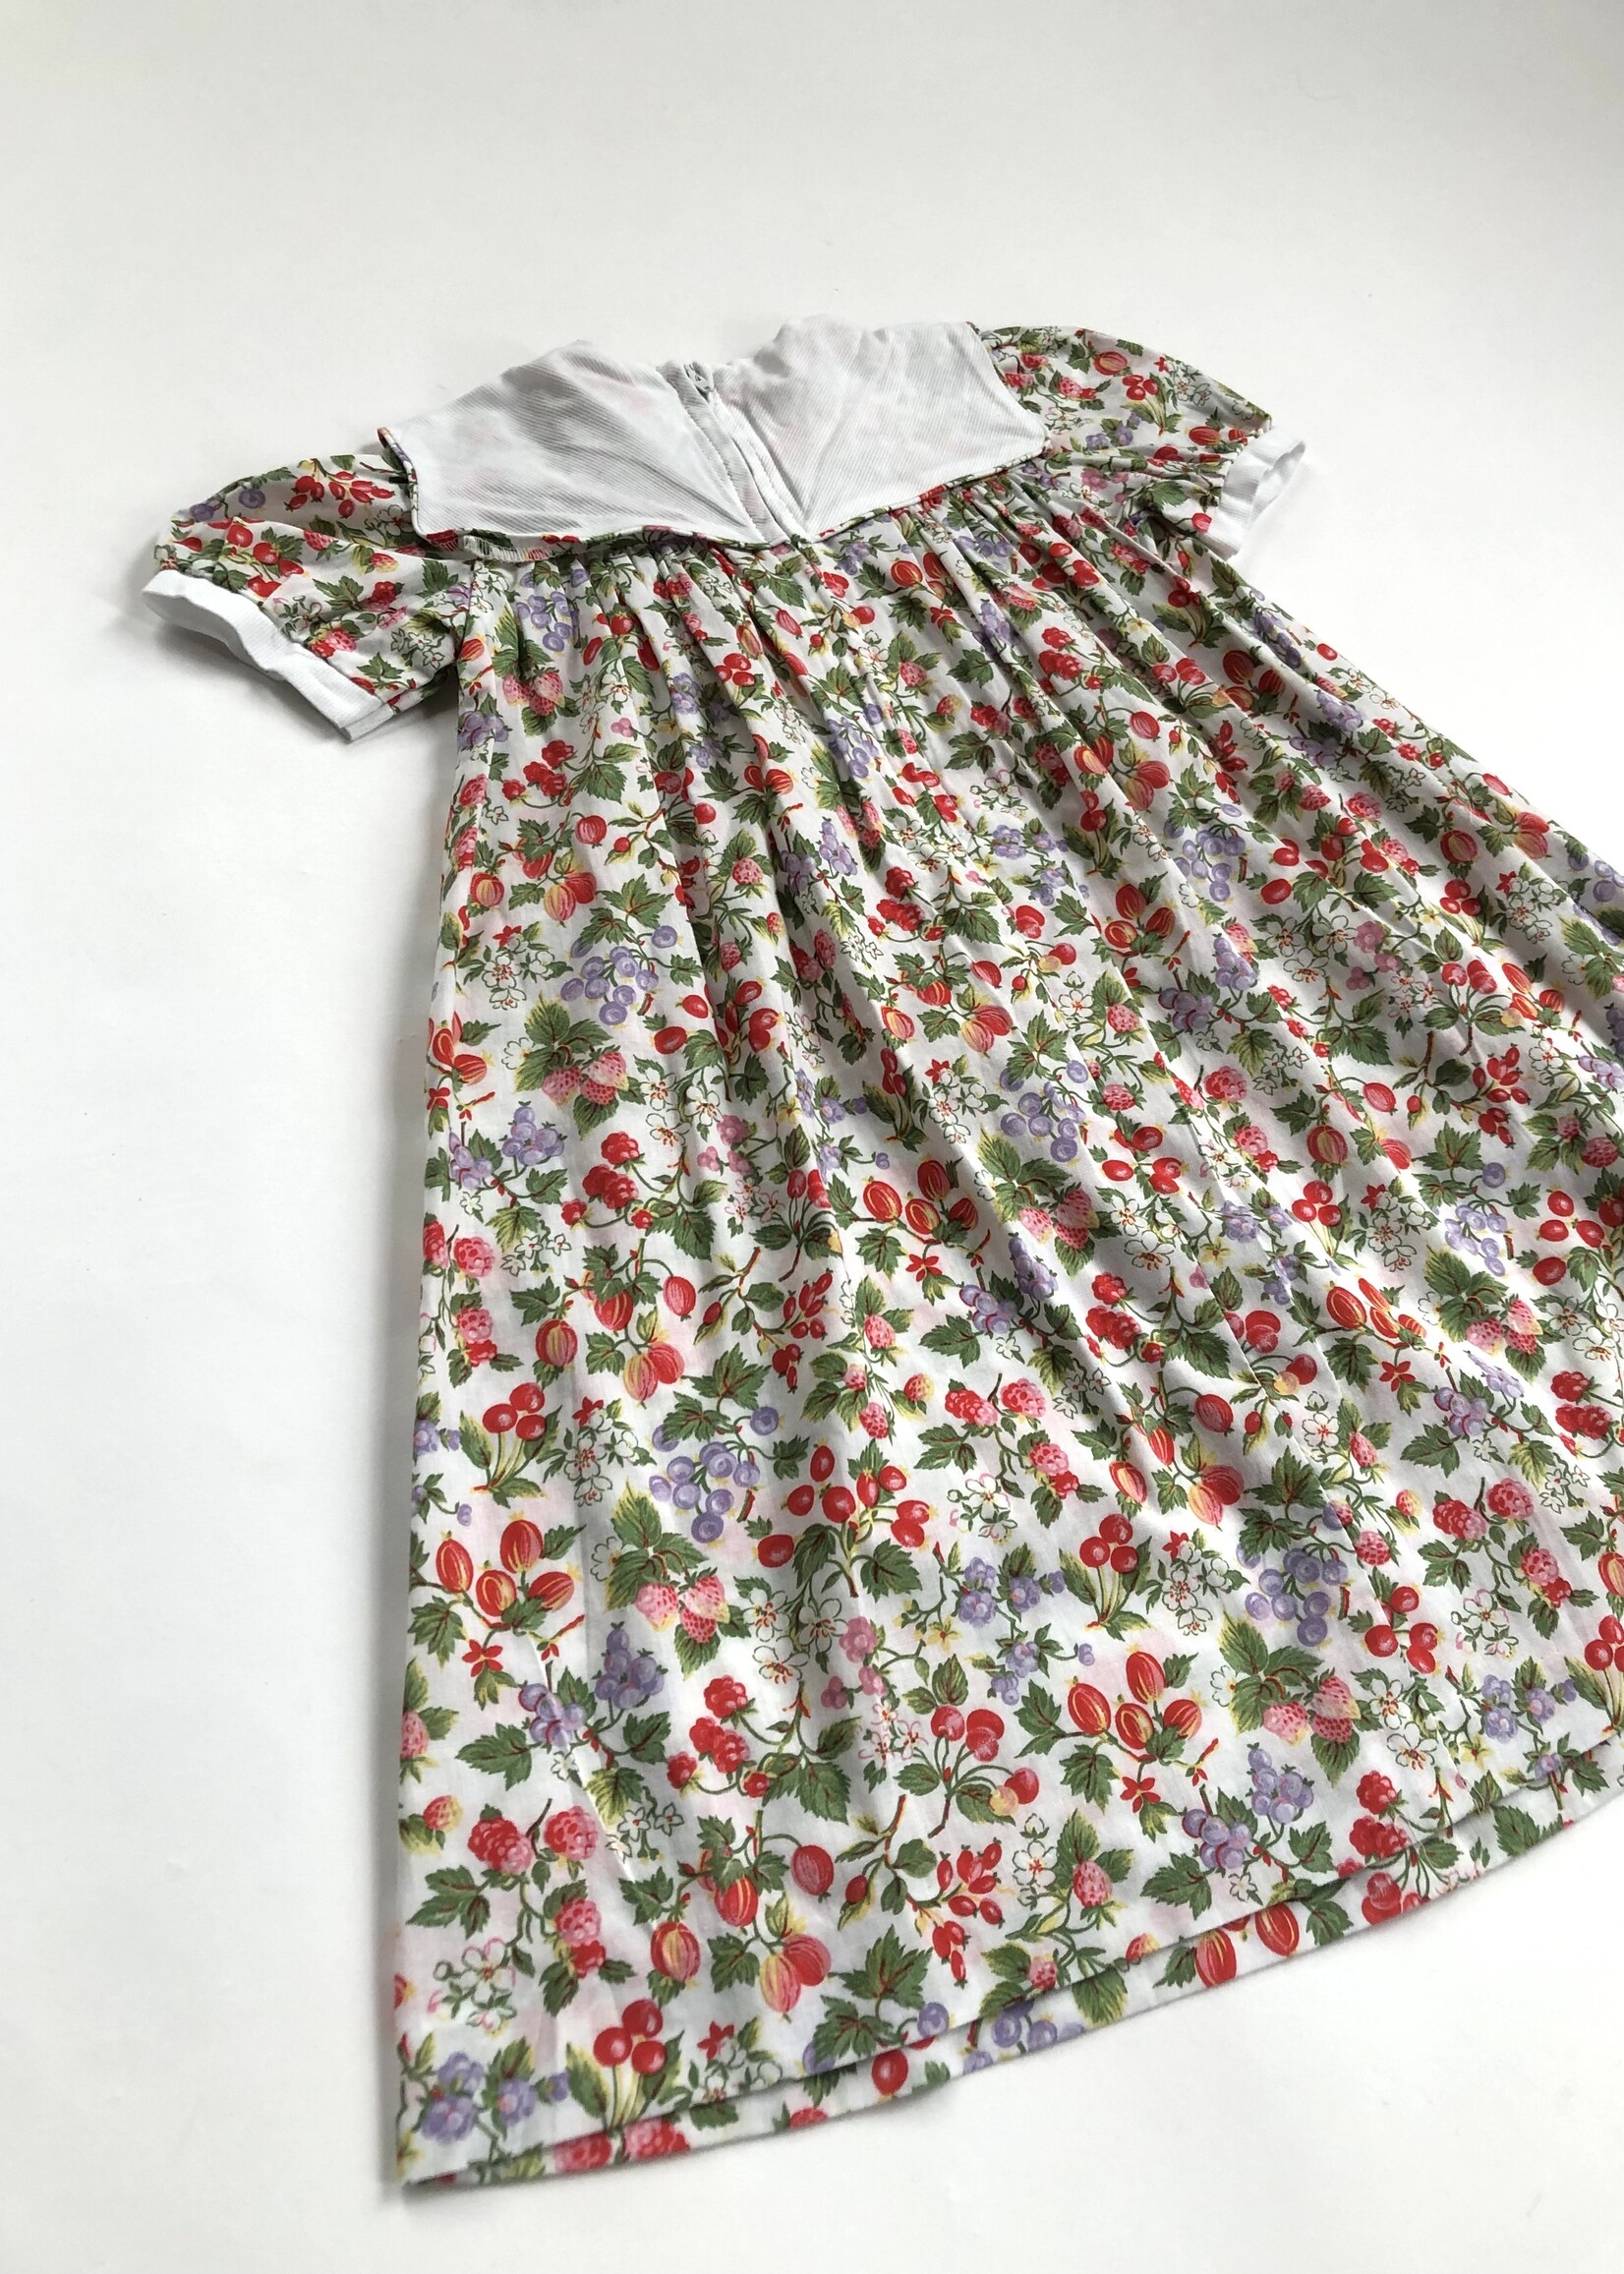 Vintage Berry sailor dress 2-3y